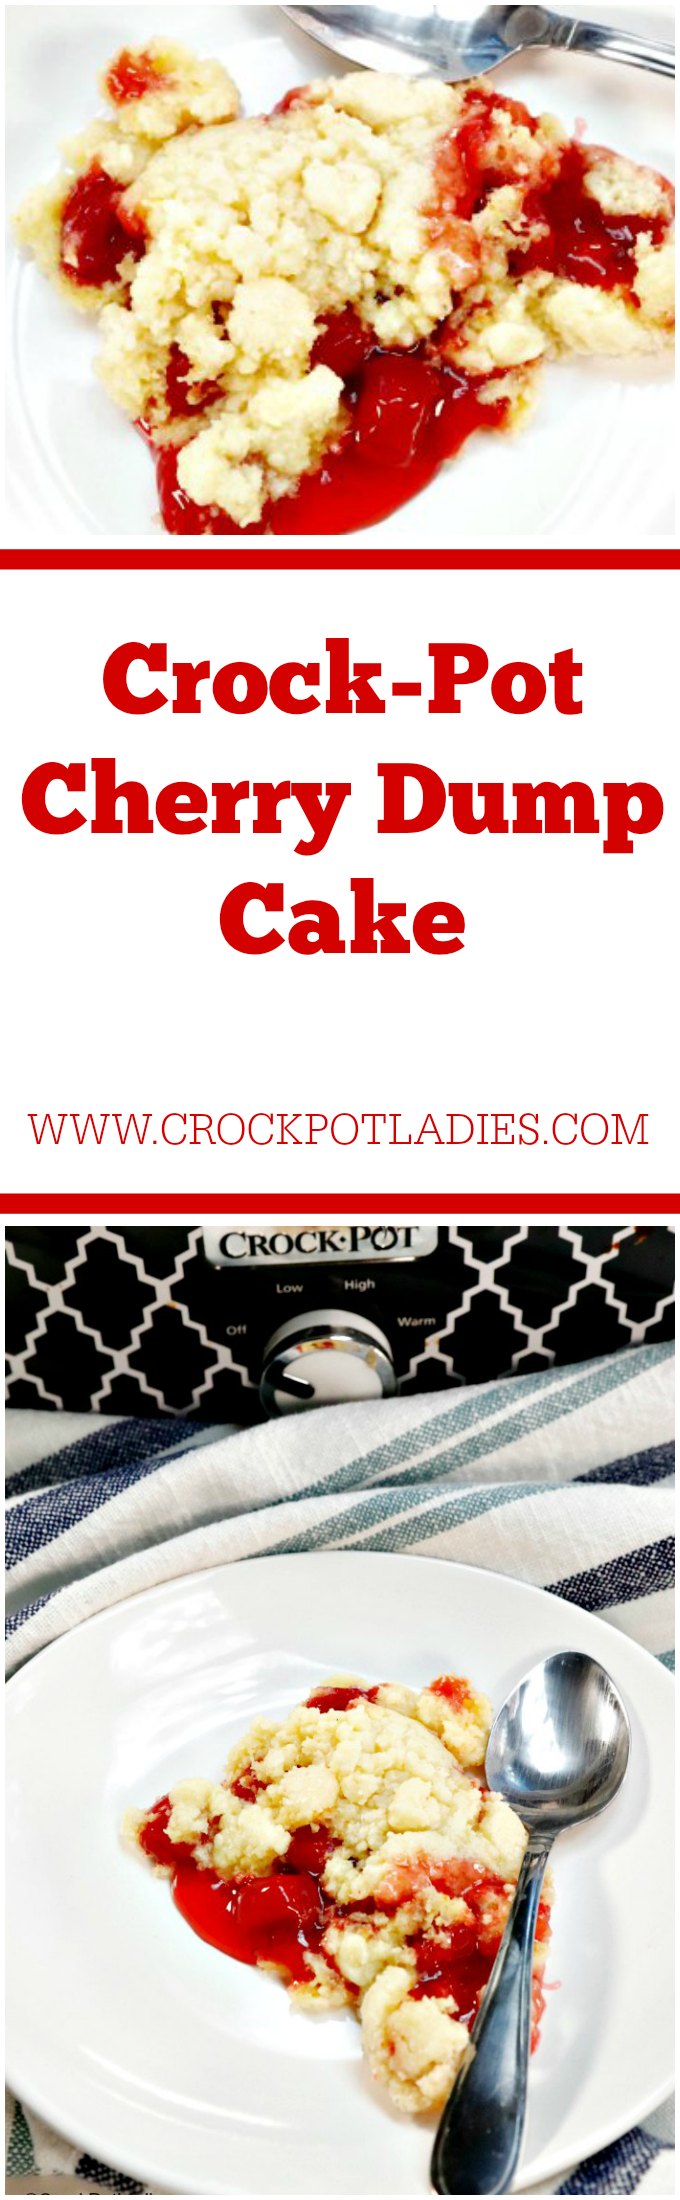 Crock-Pot Cherry Dump Cake